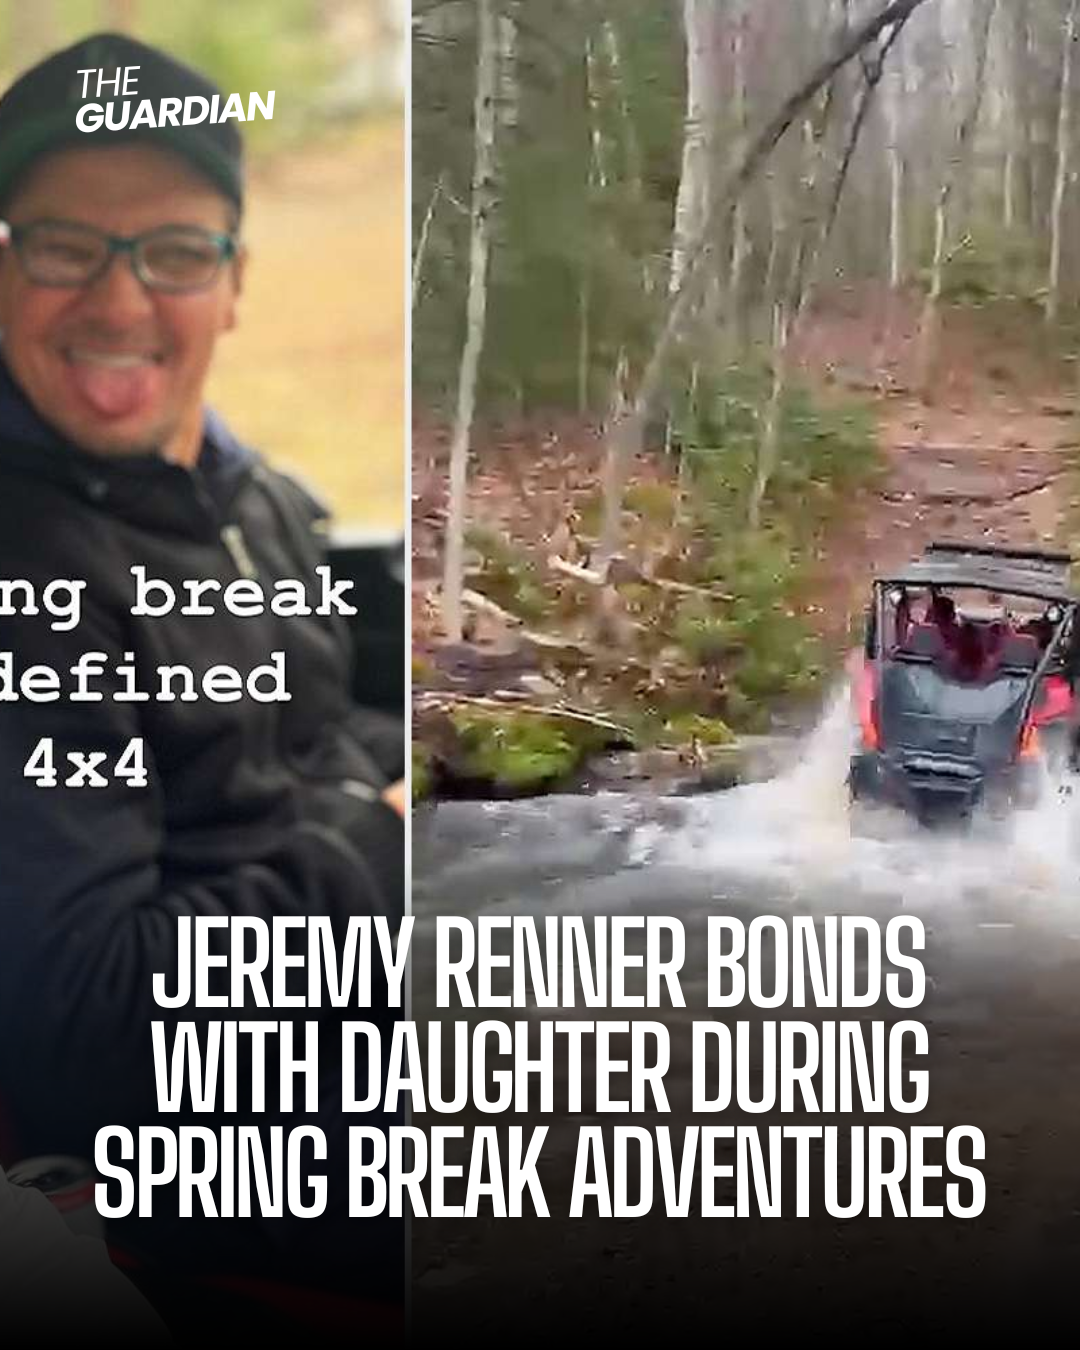 Jeremy Renner bonds with daughter during spring break adventures